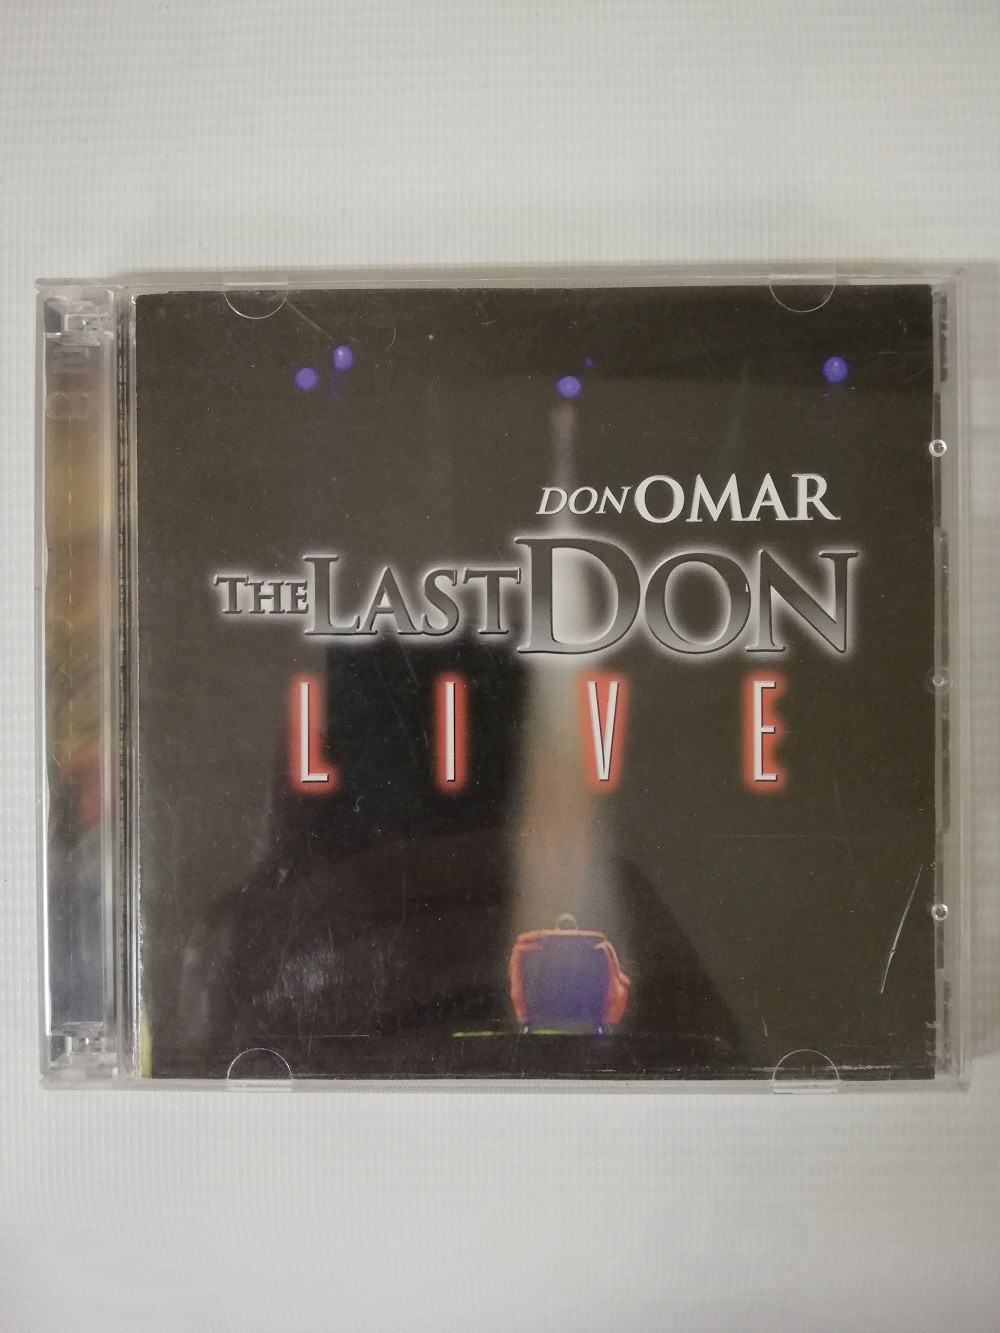 Imagen CD X 2 DON OMAR - THE LAST DON LIVE 1